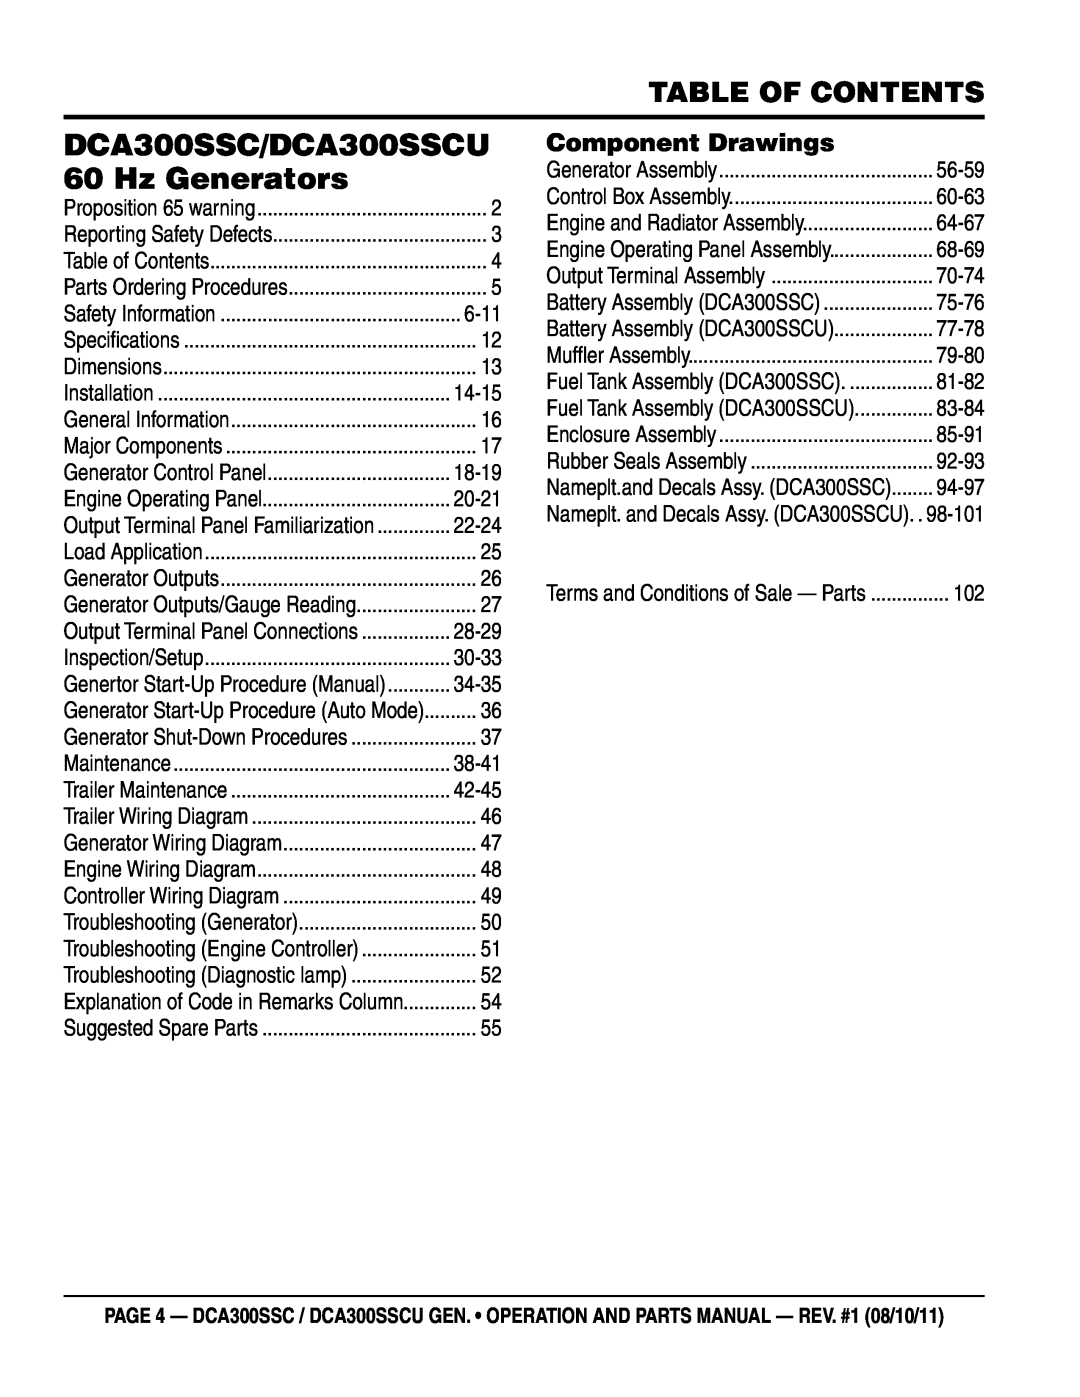 Multiquip manual Table of Contents, Component Drawings, DCA300SSC/DCA300SSCU 60 Hz Generators 